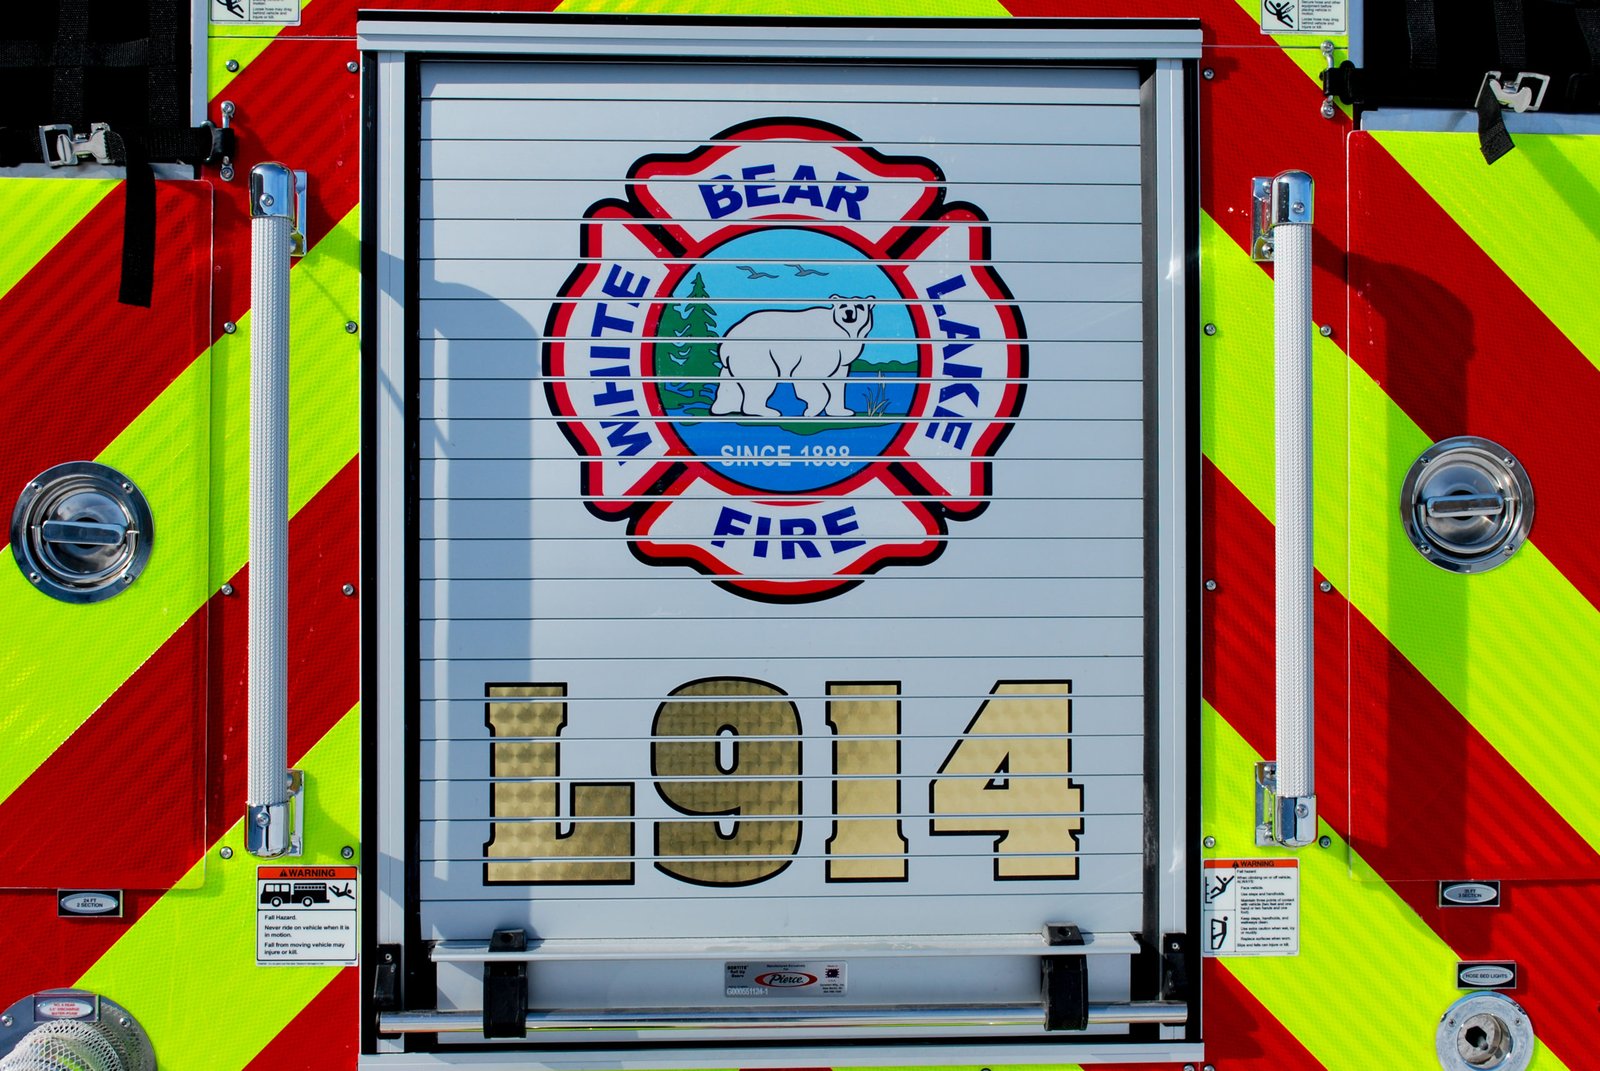 White Bear Lake Fire Department - Aerial